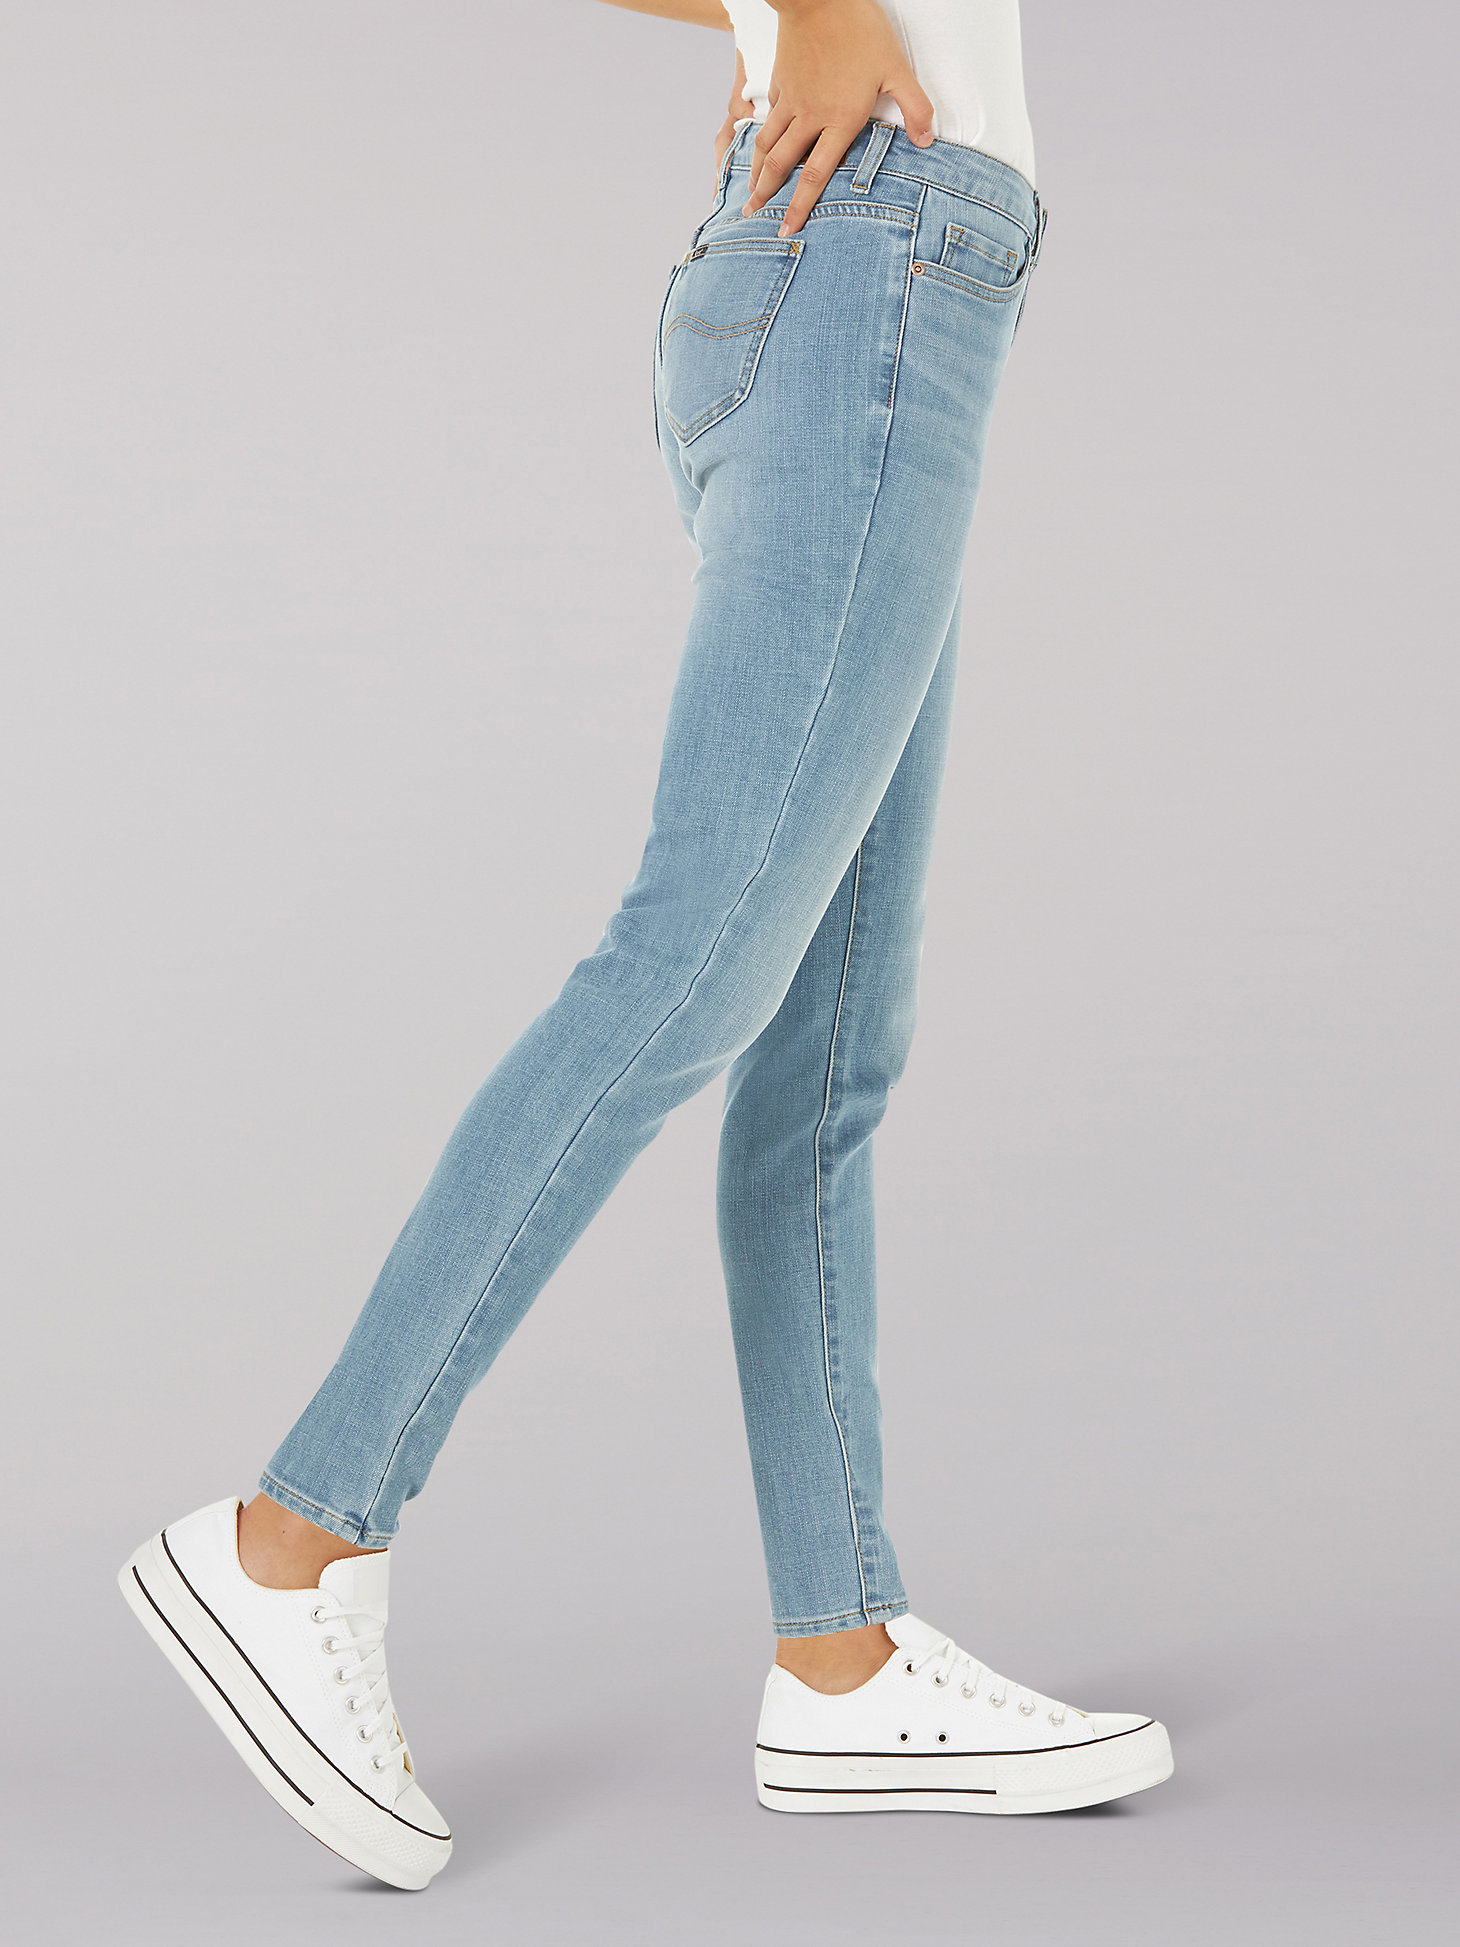 Women's Legendary Slim Fit Skinny Jean in Solstice alternative view 2